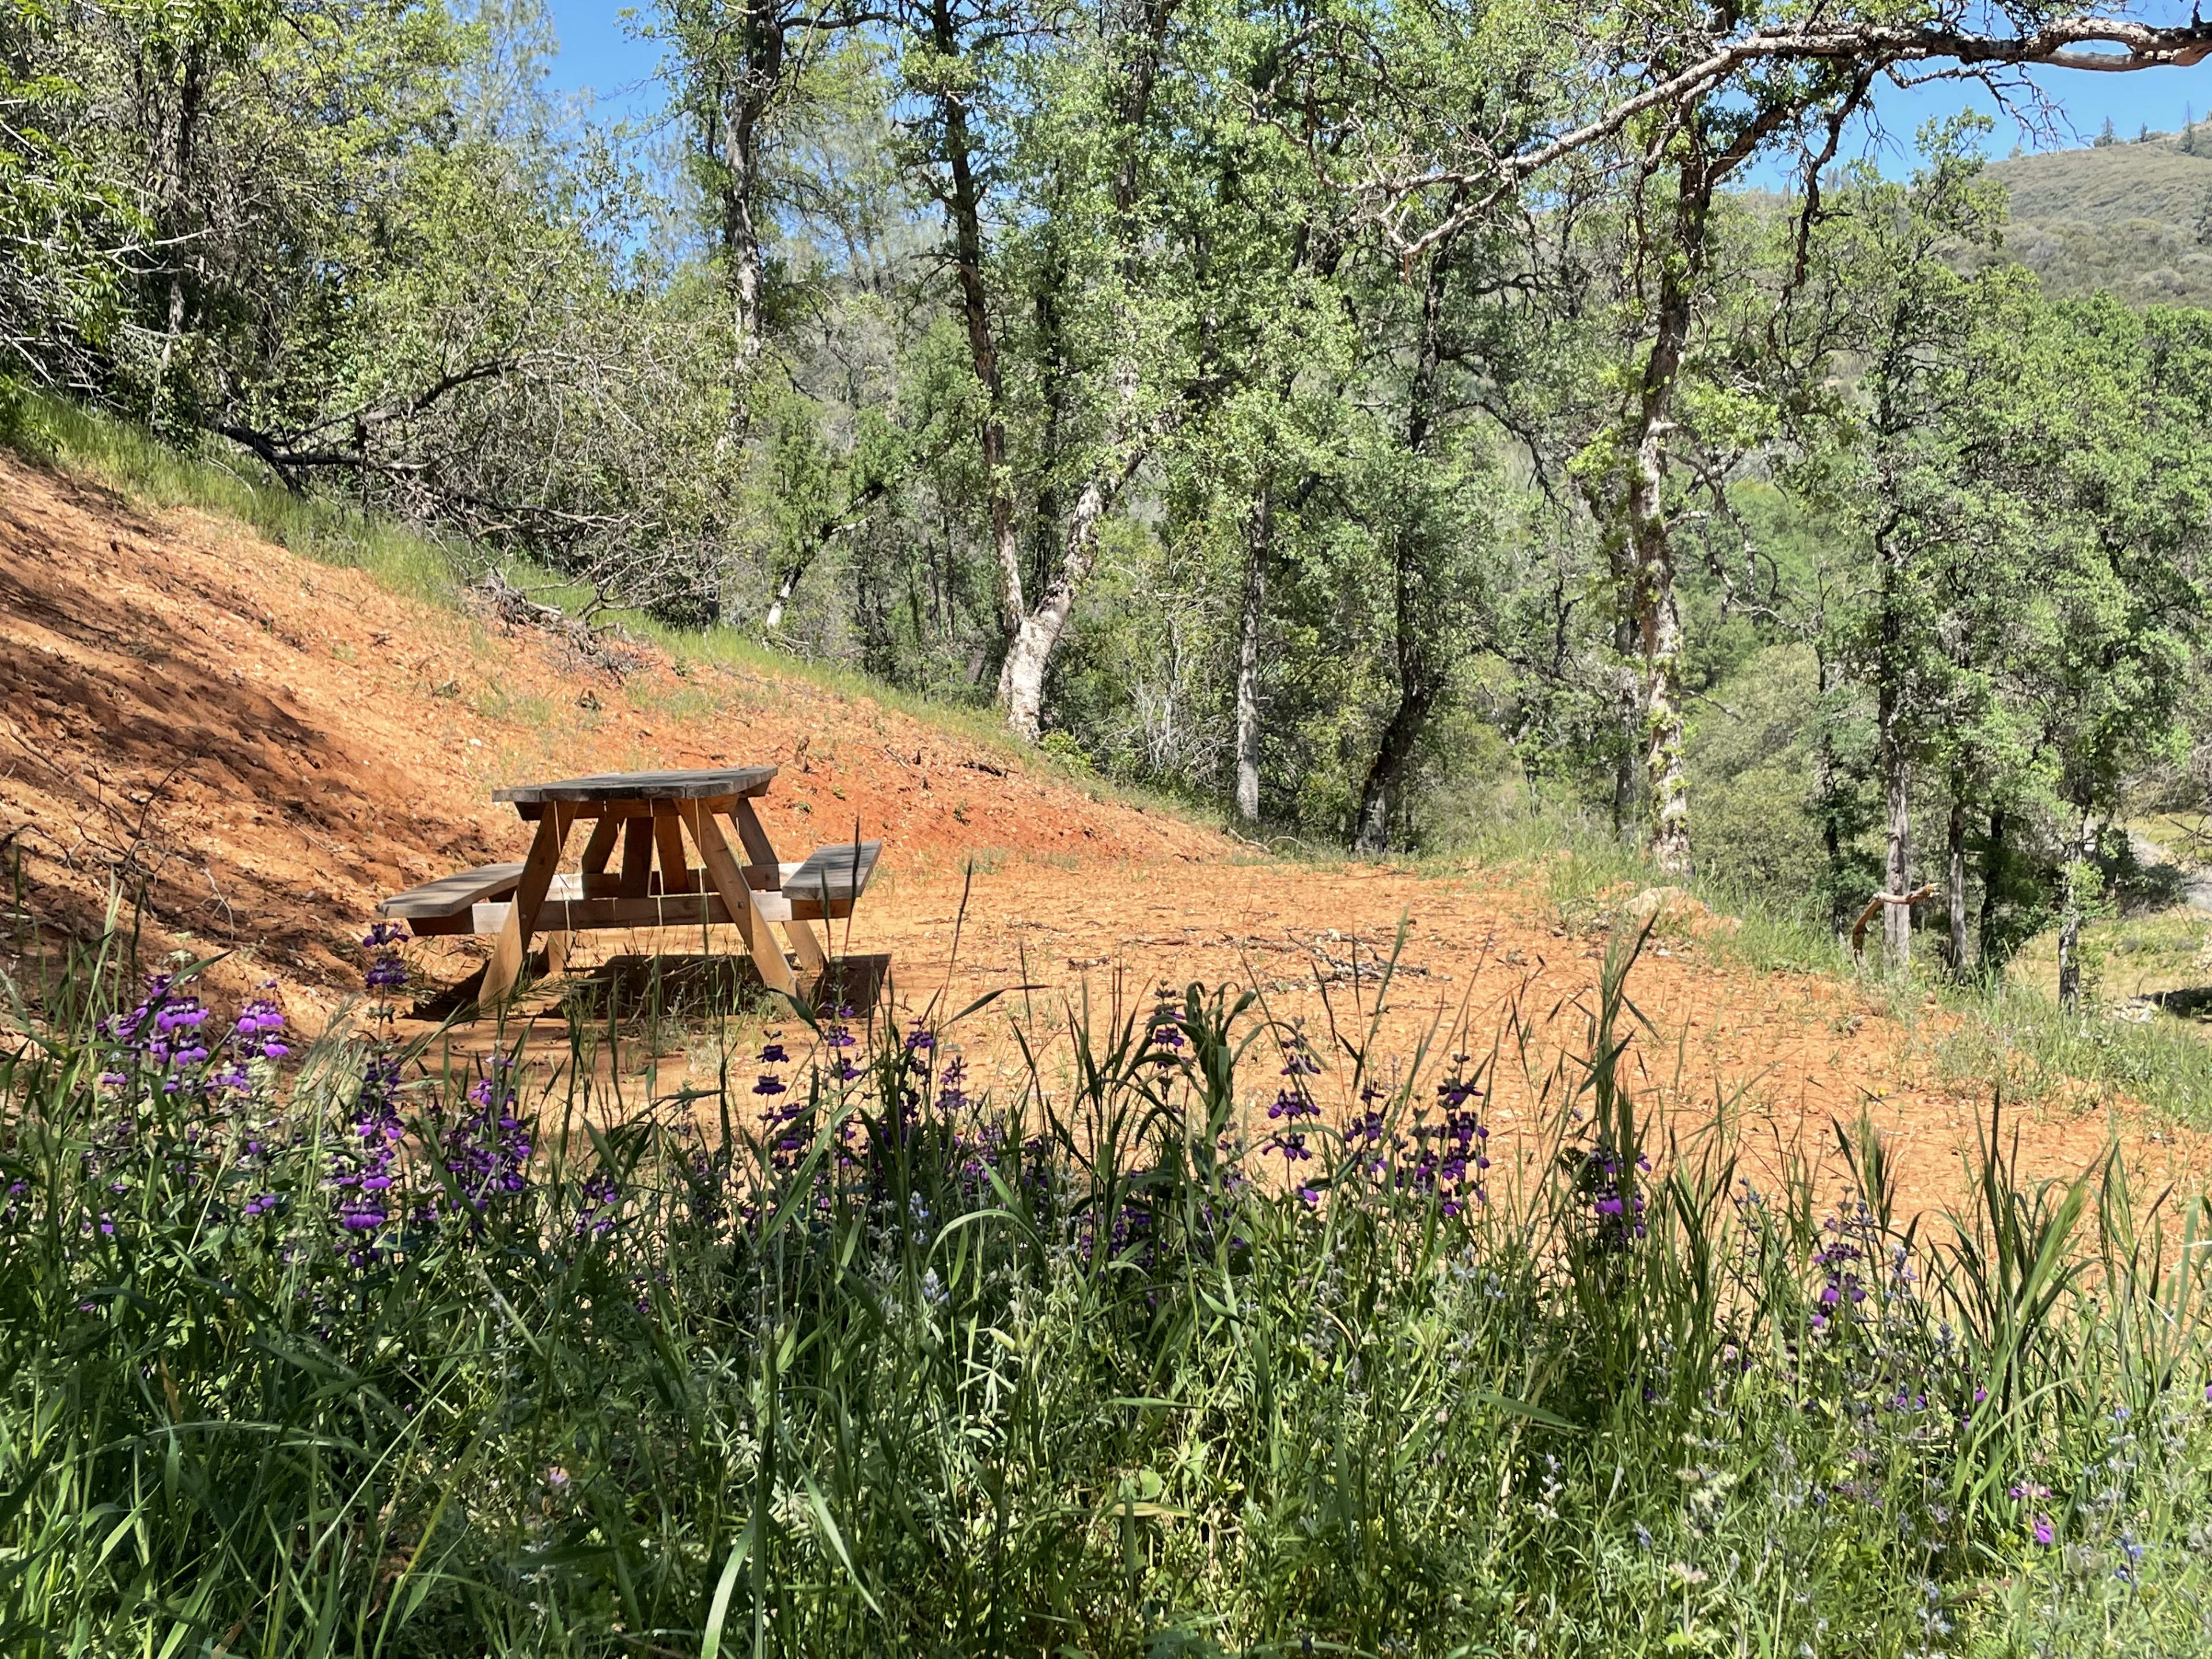 Sierra View amidst the wildflowers in springtime.